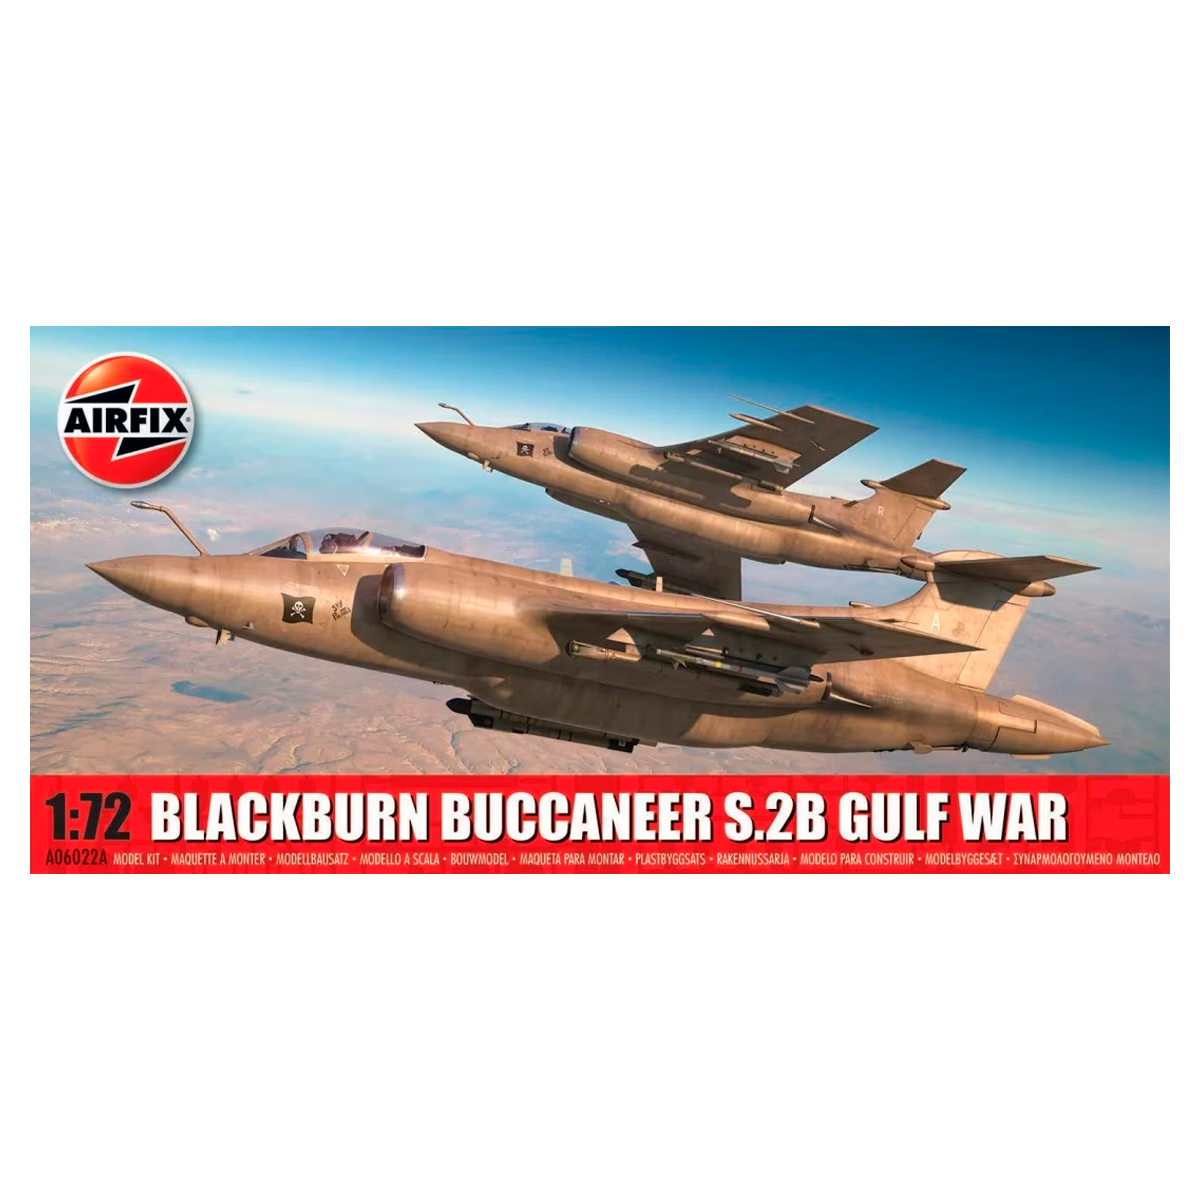 Blackburn Buccaneer S.2 GULF WAR 1/72